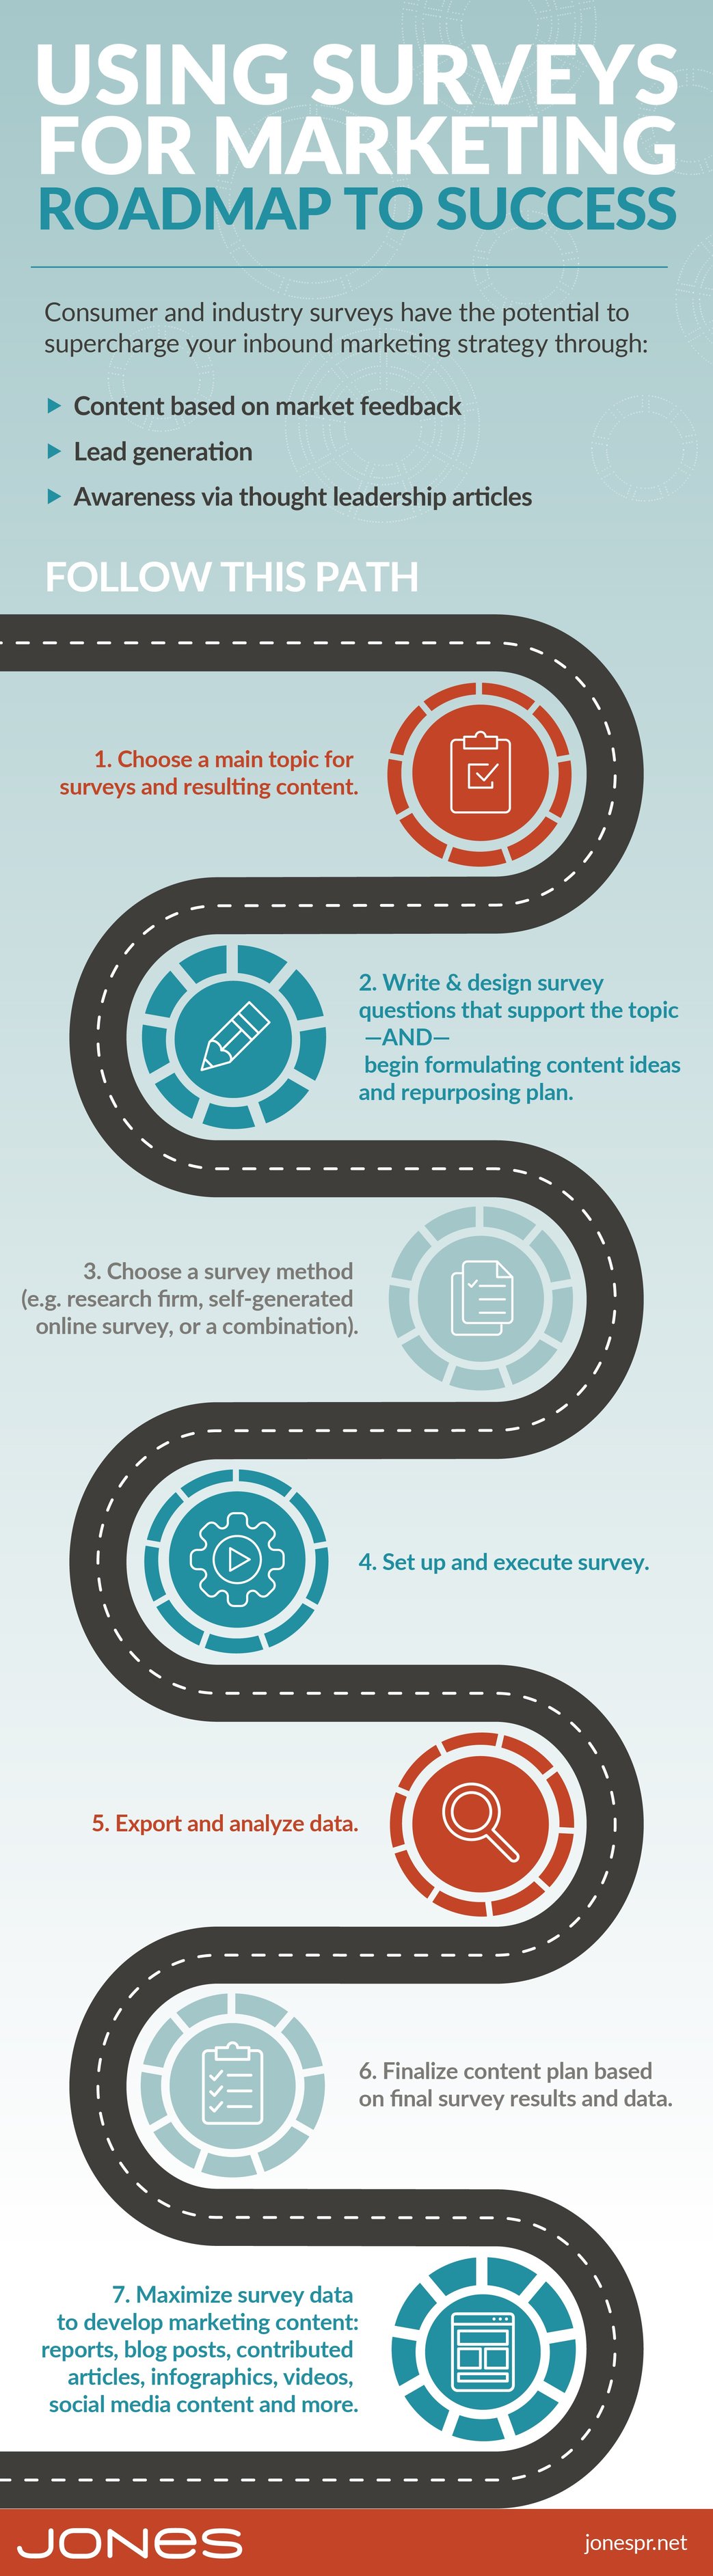 jones-infographic-survey-marketing-process-v2